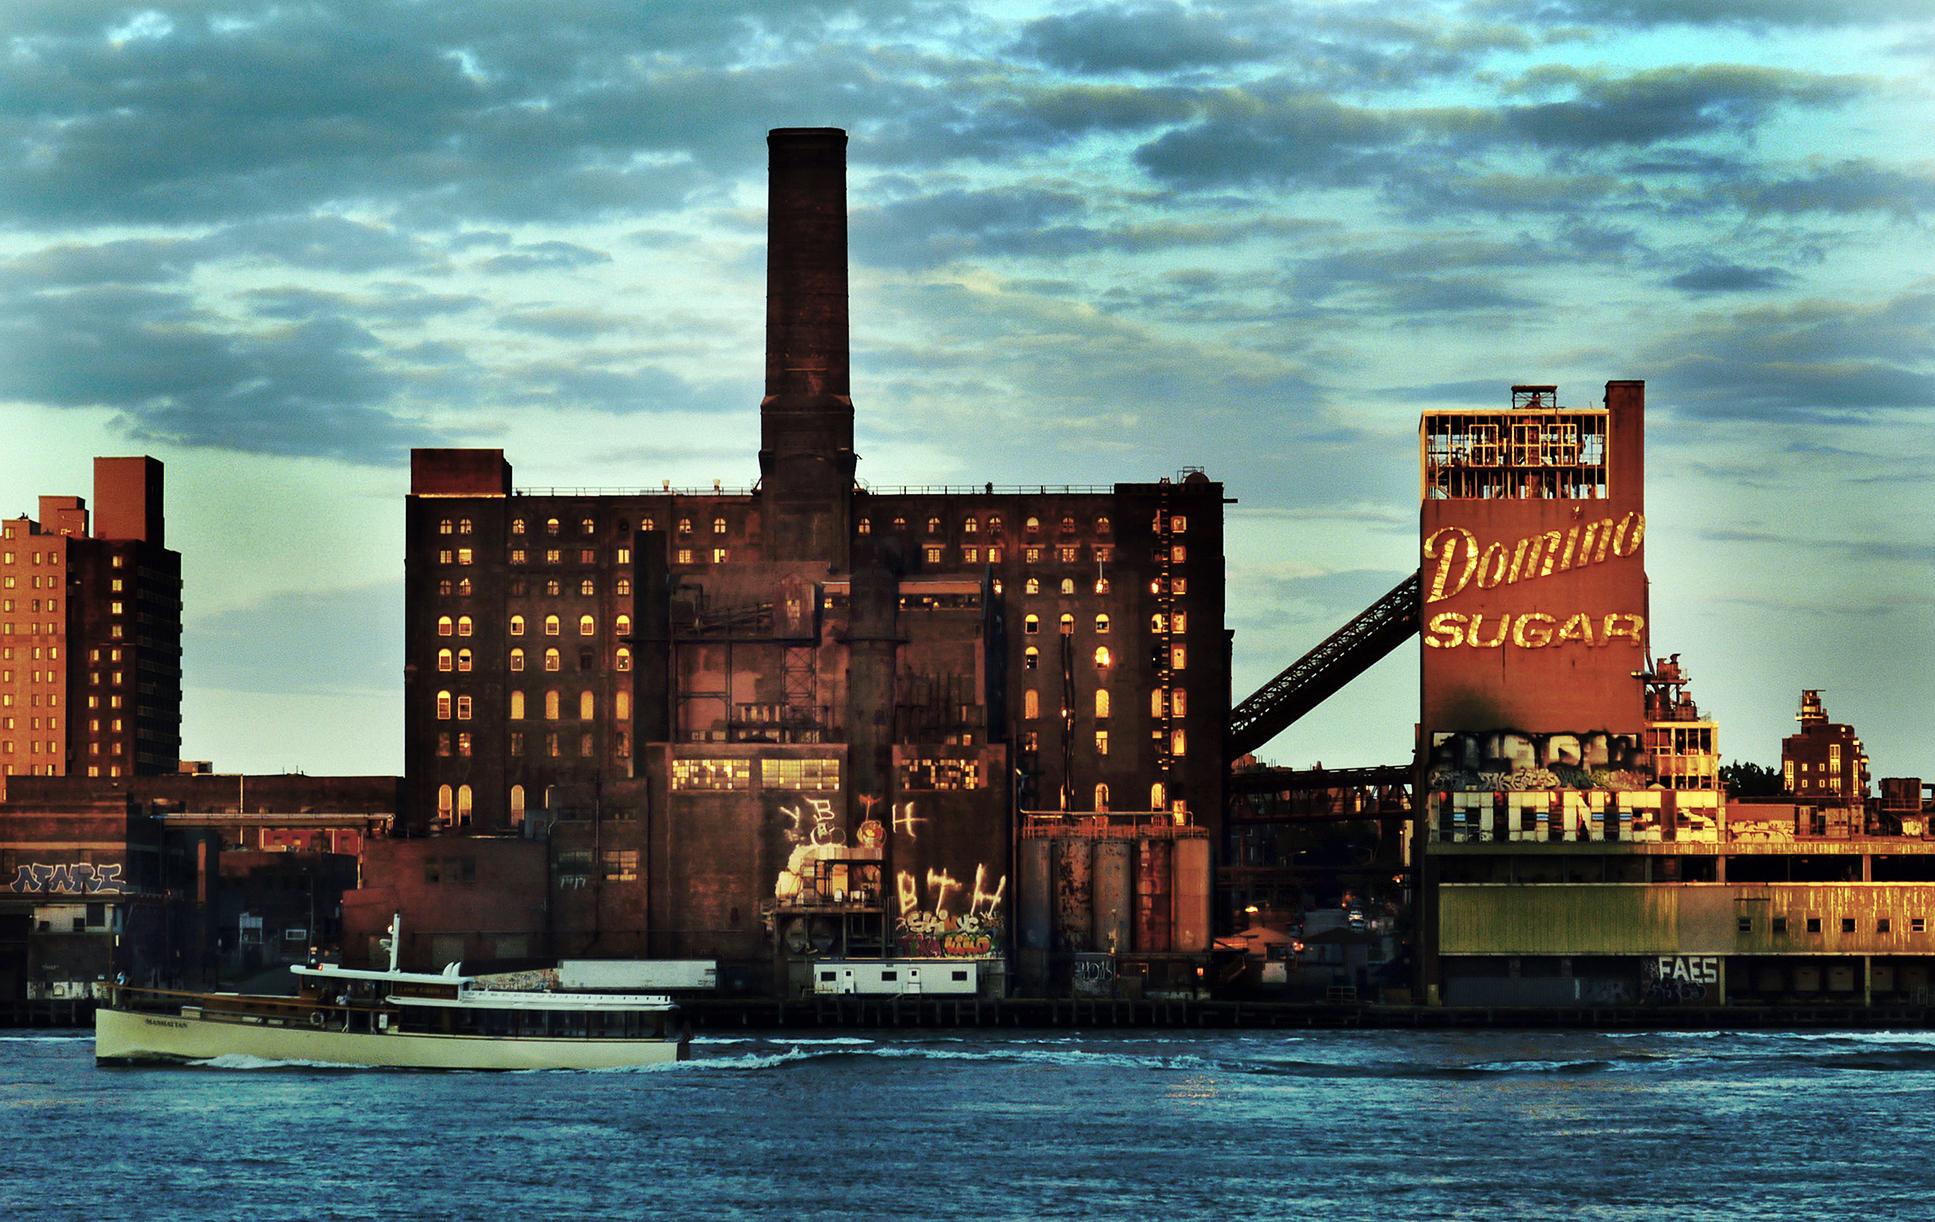 Landscape Photograph Fernando Natalici - Photo de Domino Sugar Factory Williamsburg Brooklyn (photographie deBrooklyn New York) 